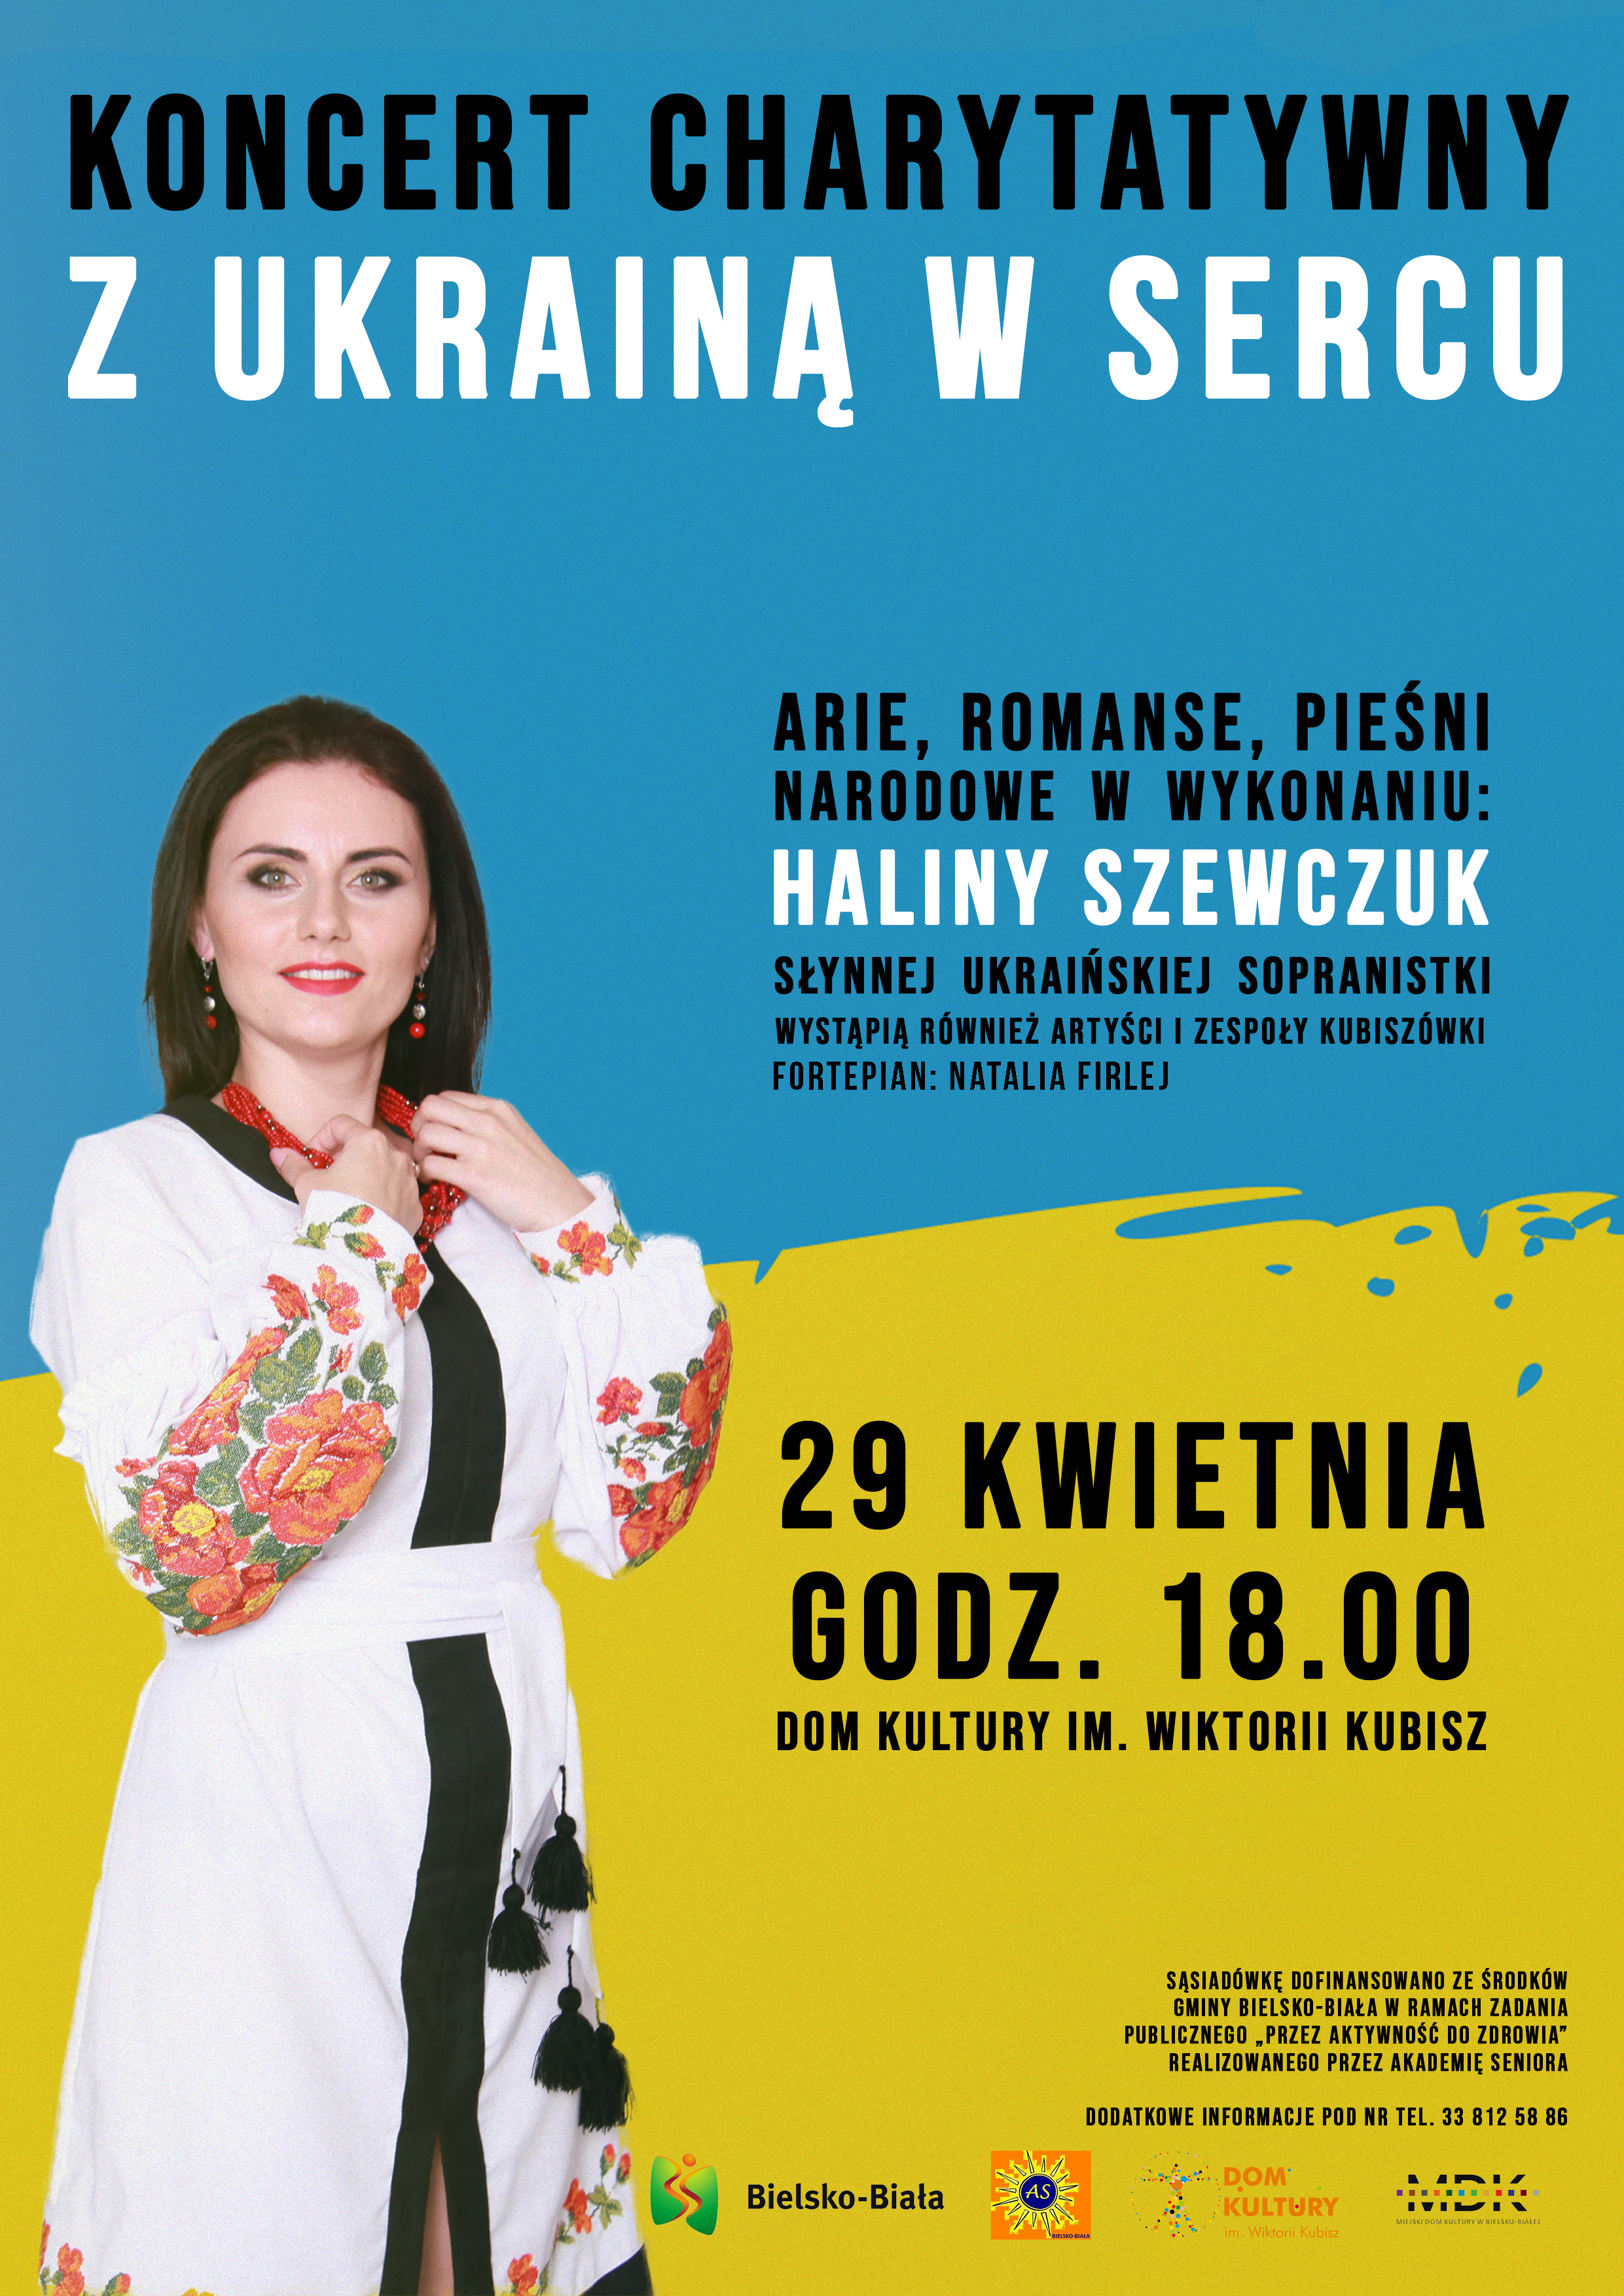  Z Ukrainą w sercu Na zdjęciu plakat koncertu